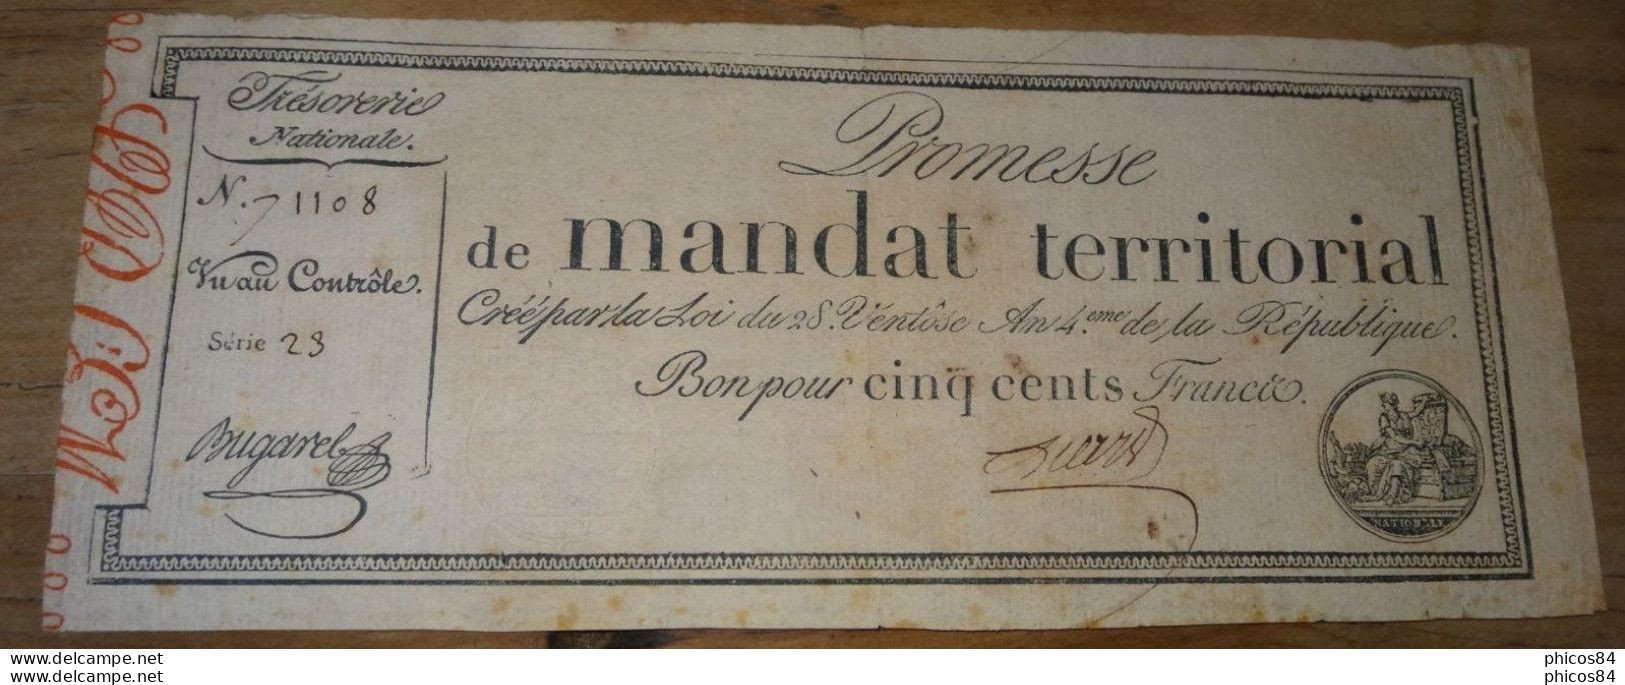 Exceptionnel Mandat Territorial 500 Francs De La Série 23 Avec Un Numéro Supérieur A 50000 - Assignats & Mandats Territoriaux